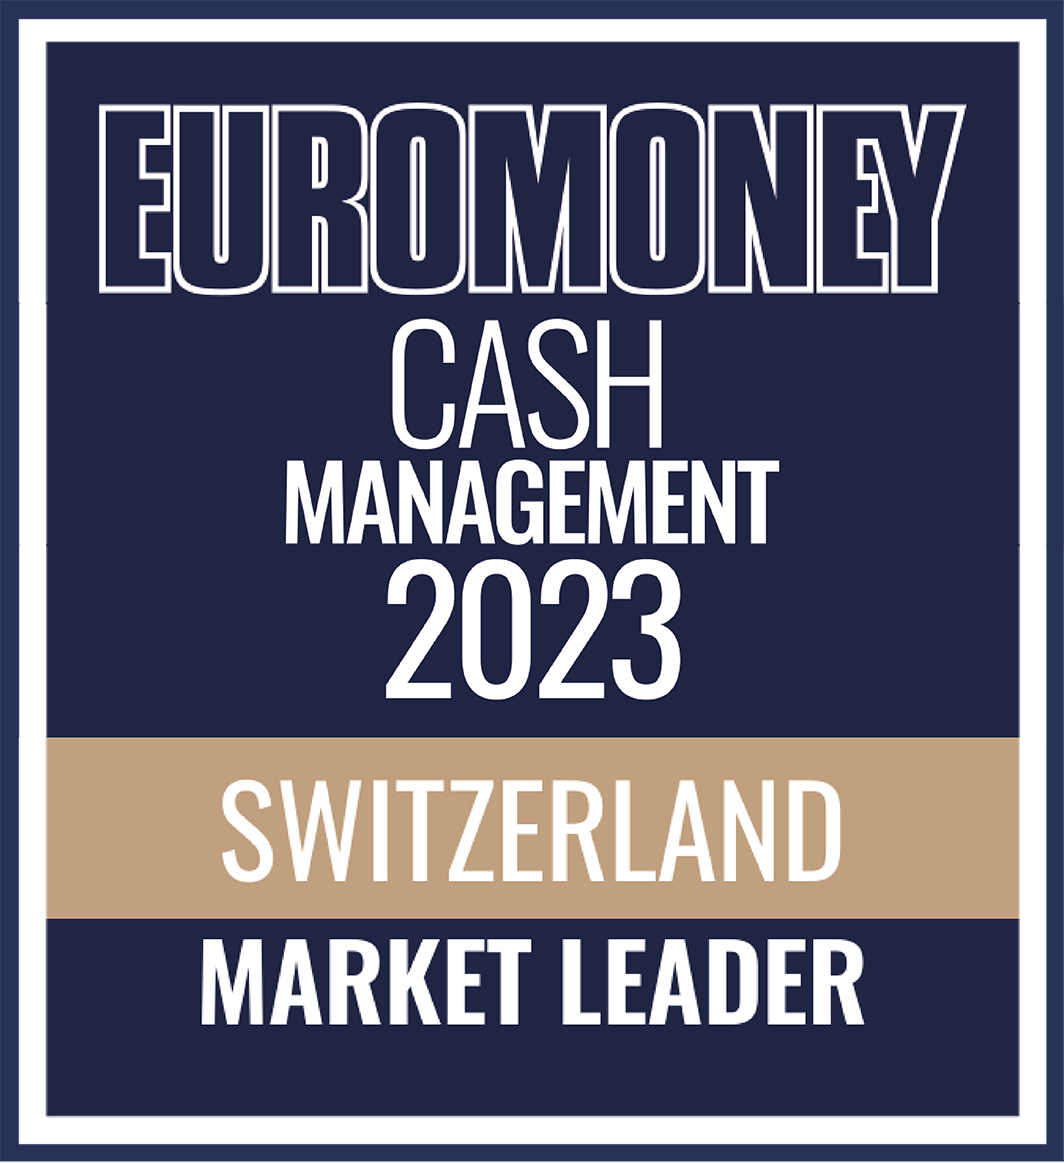 Euromoney cash management 2023 Switzerland market leader award logo